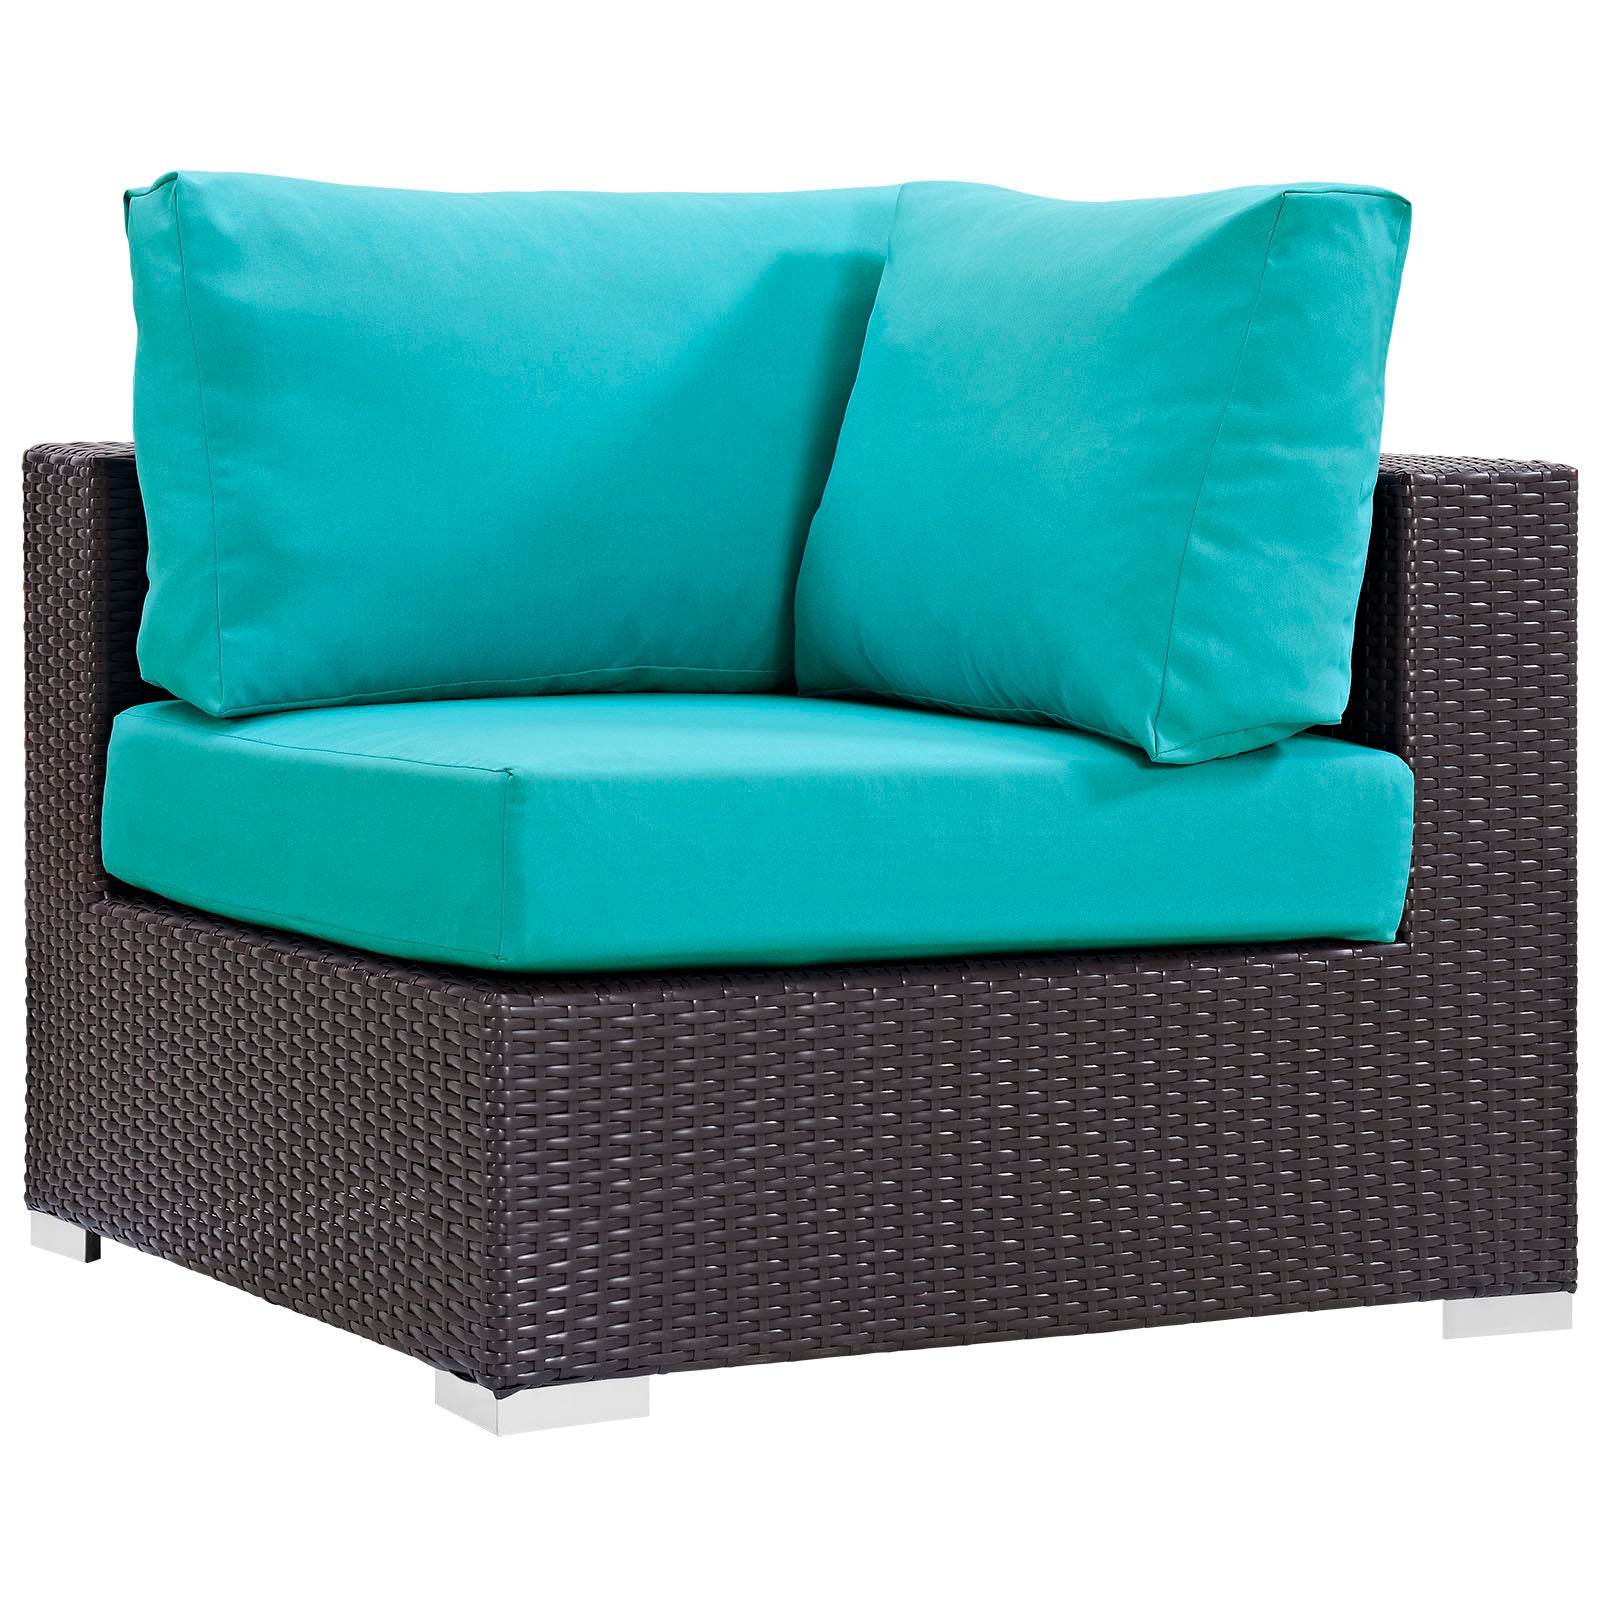 Modway Outdoor Chairs - Convene Outdoor Patio Corner Espresso Turquoise